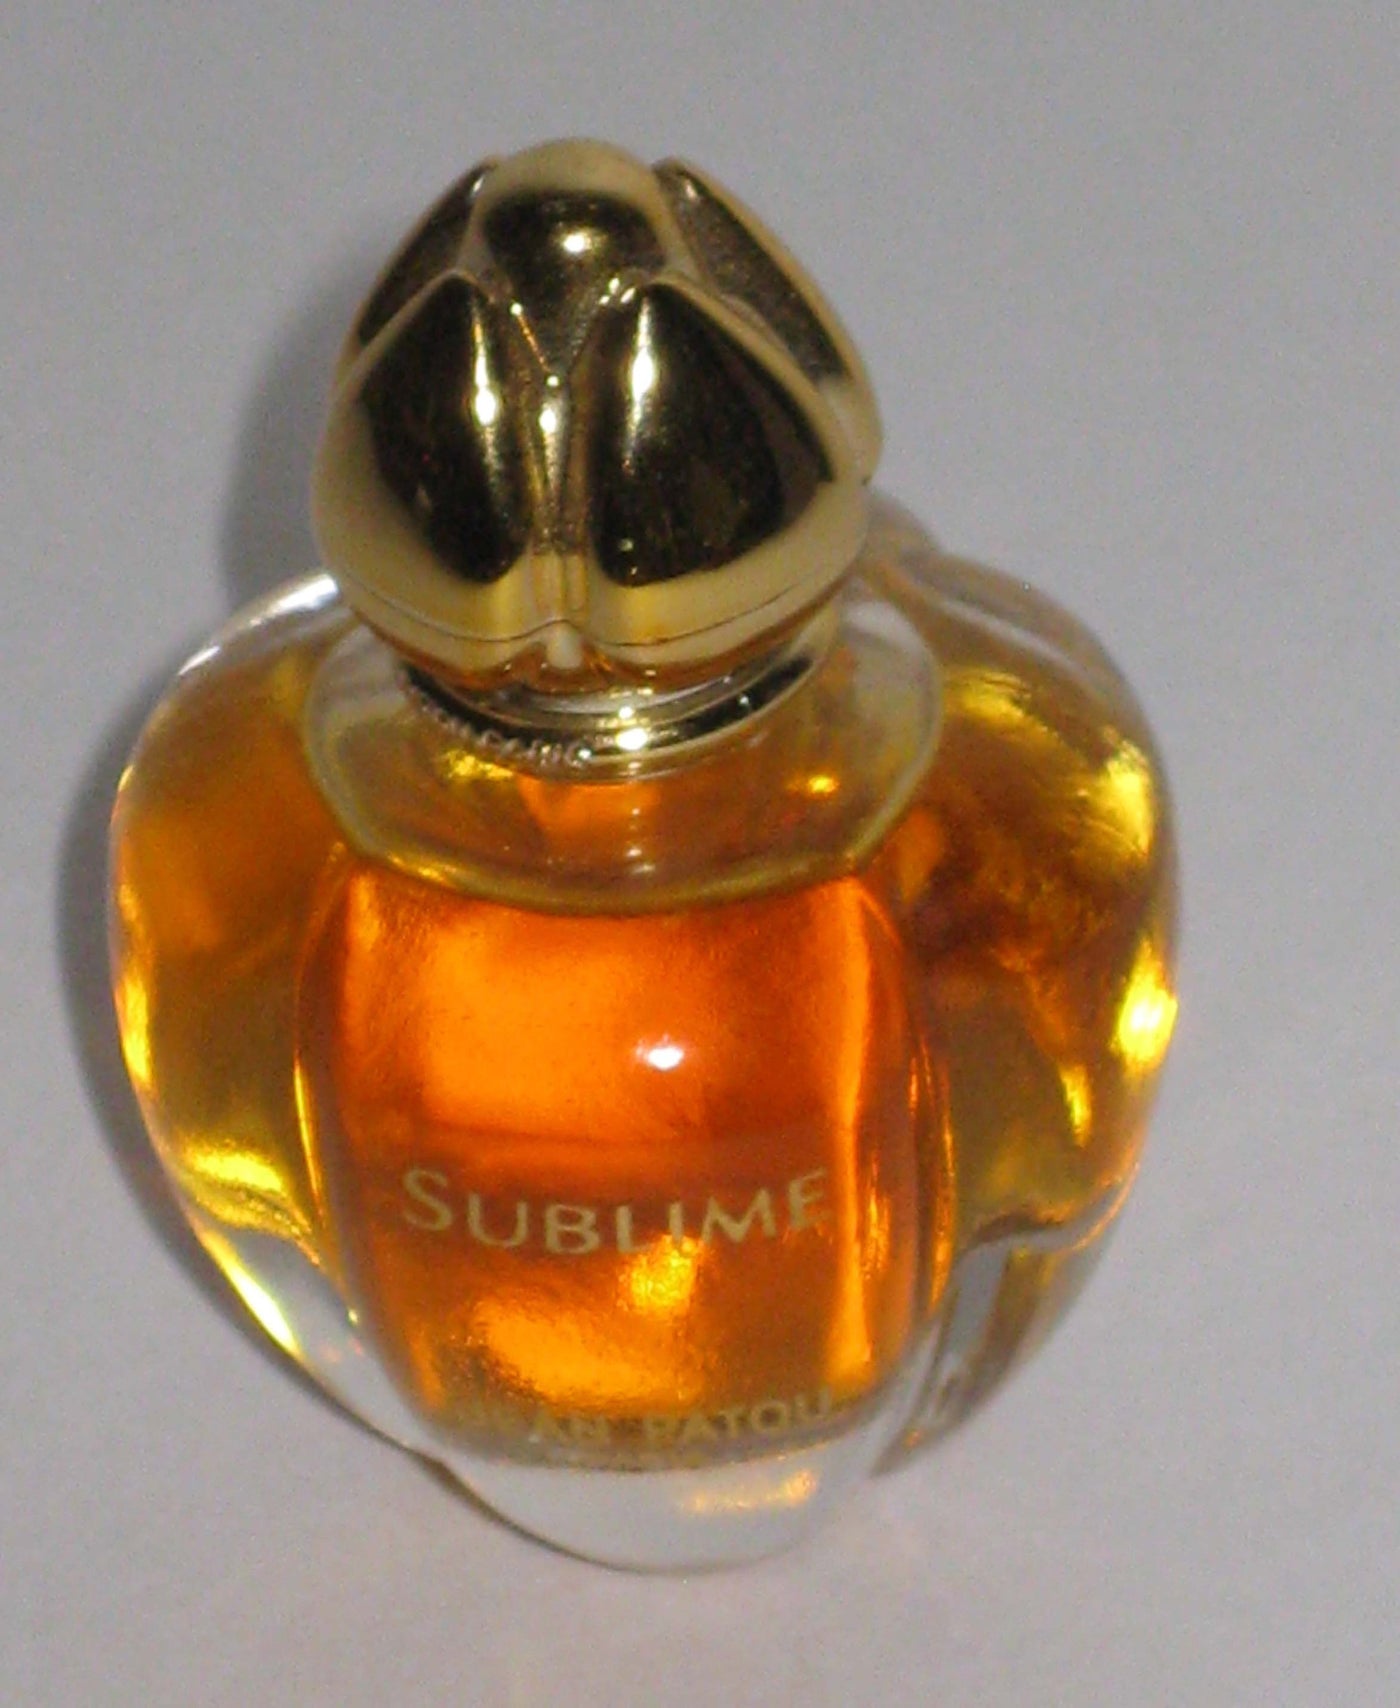 Jean Patou Sublime Perfume Mini